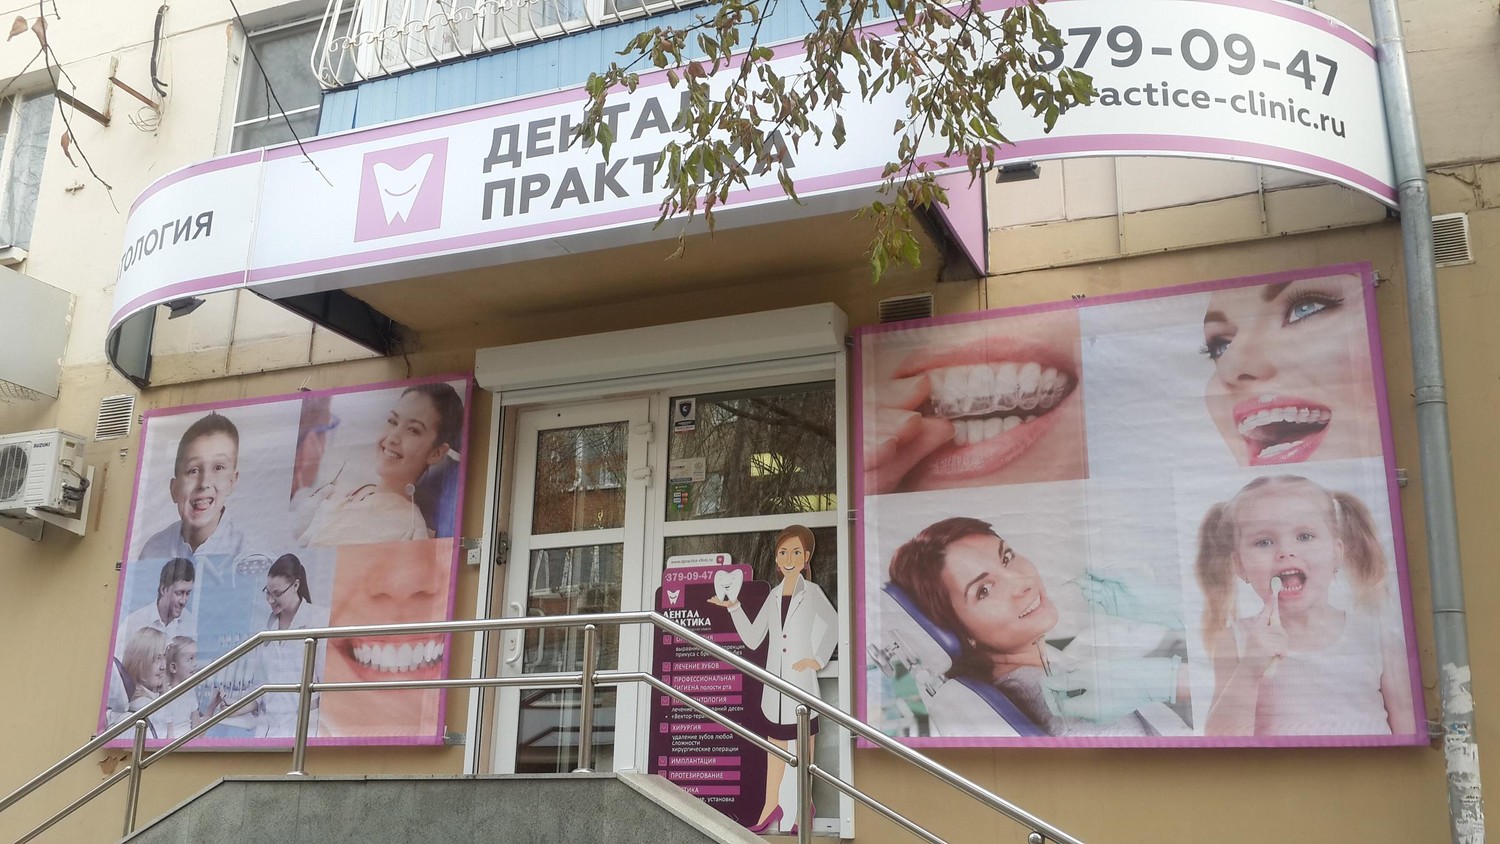 Дентал-Практика - Найдите проверенную стоматологию Yull.ru